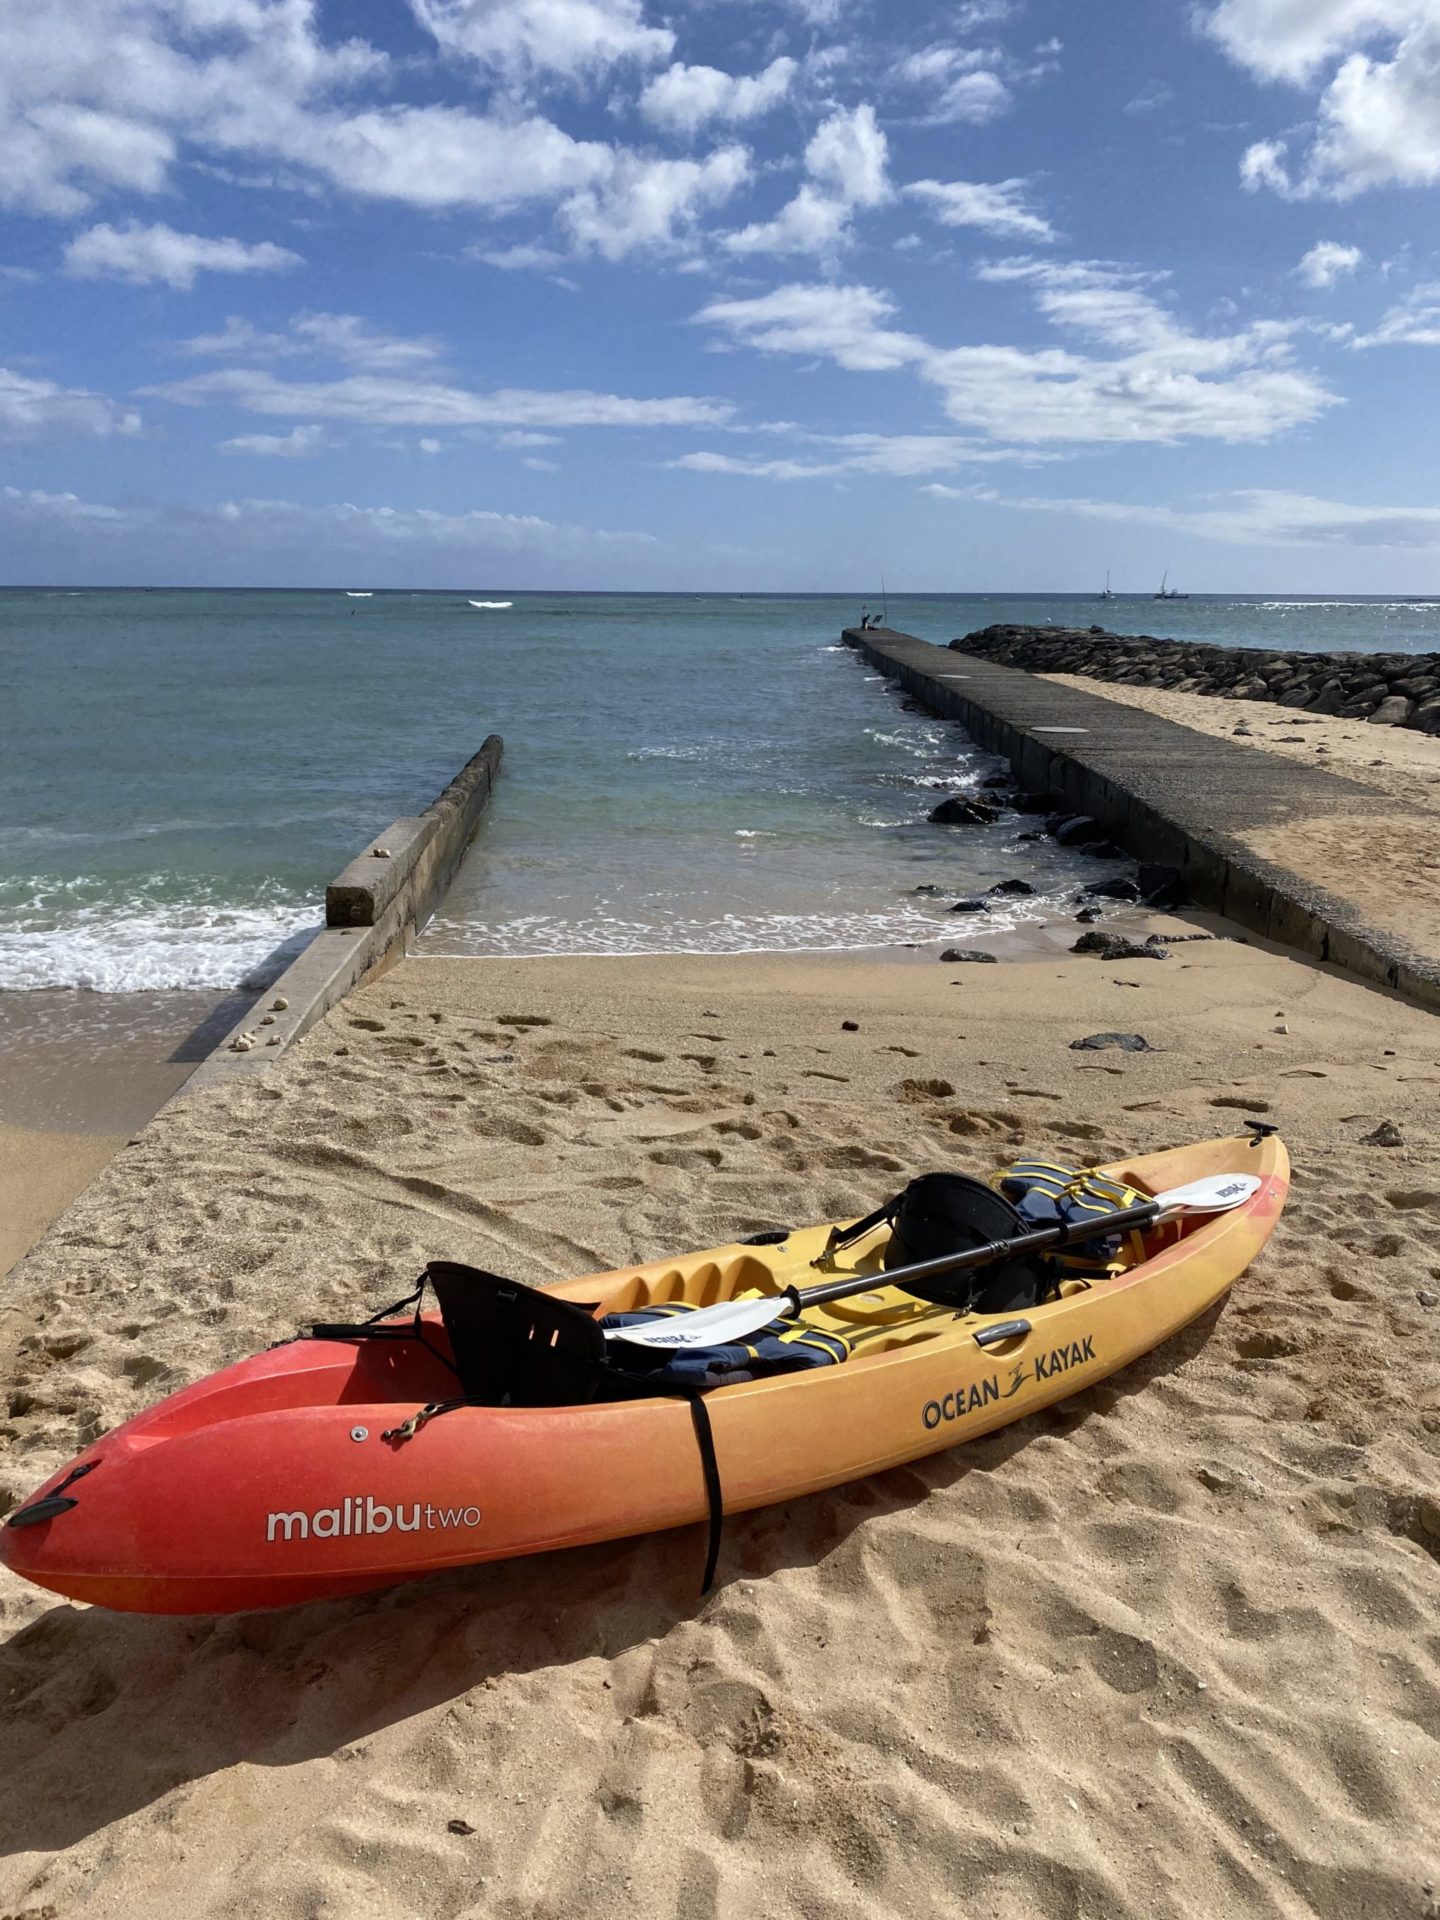 https://wsbservice.com/wp-content/uploads/2021/04/two-person-kayak-waikiki-beach-scaled.jpg